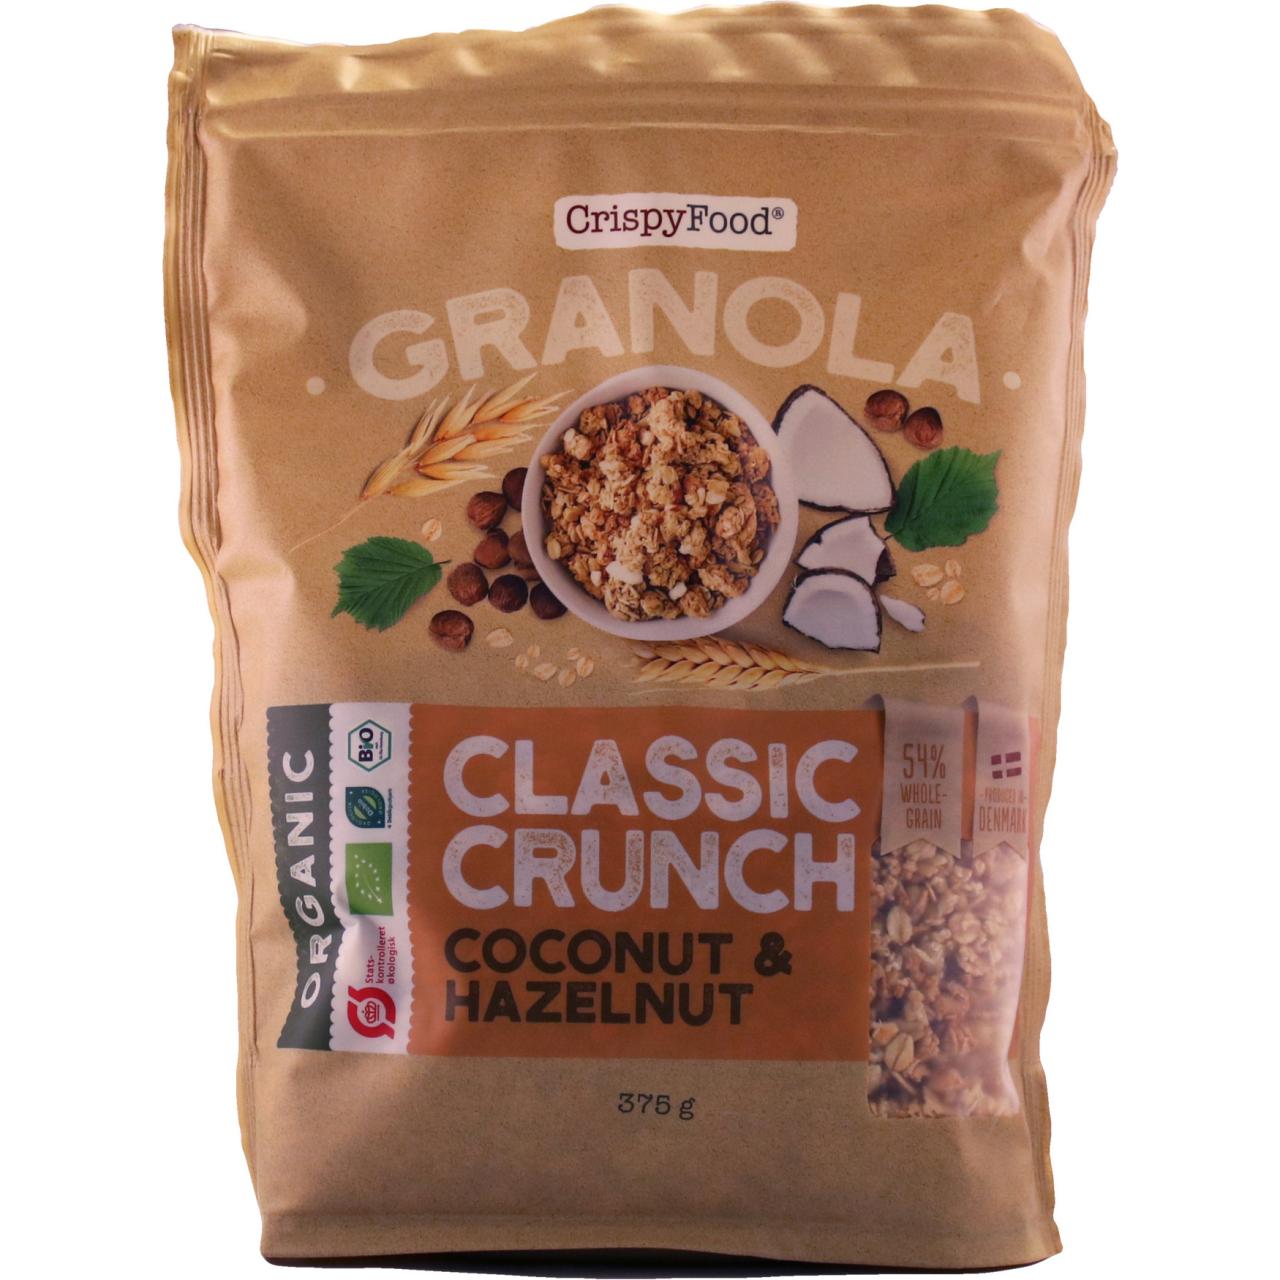 * Crispy Food Granola Classic Crunch Øko 375g